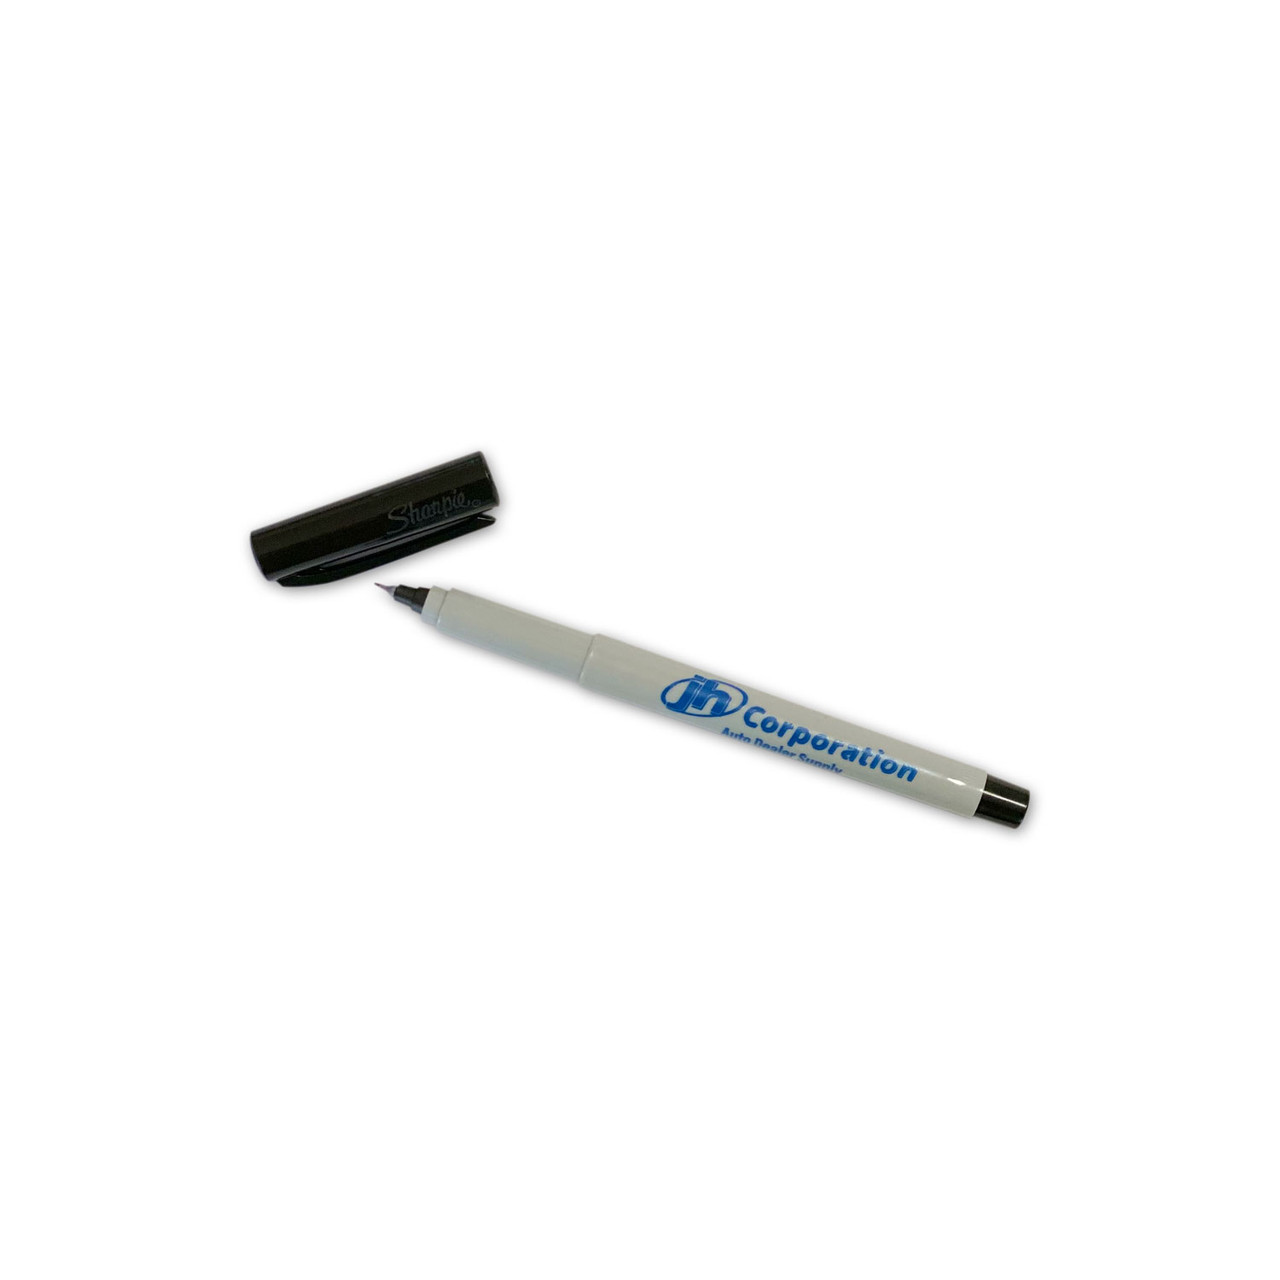 Sharpie® Permanent Marker - Black Extra Fine Point